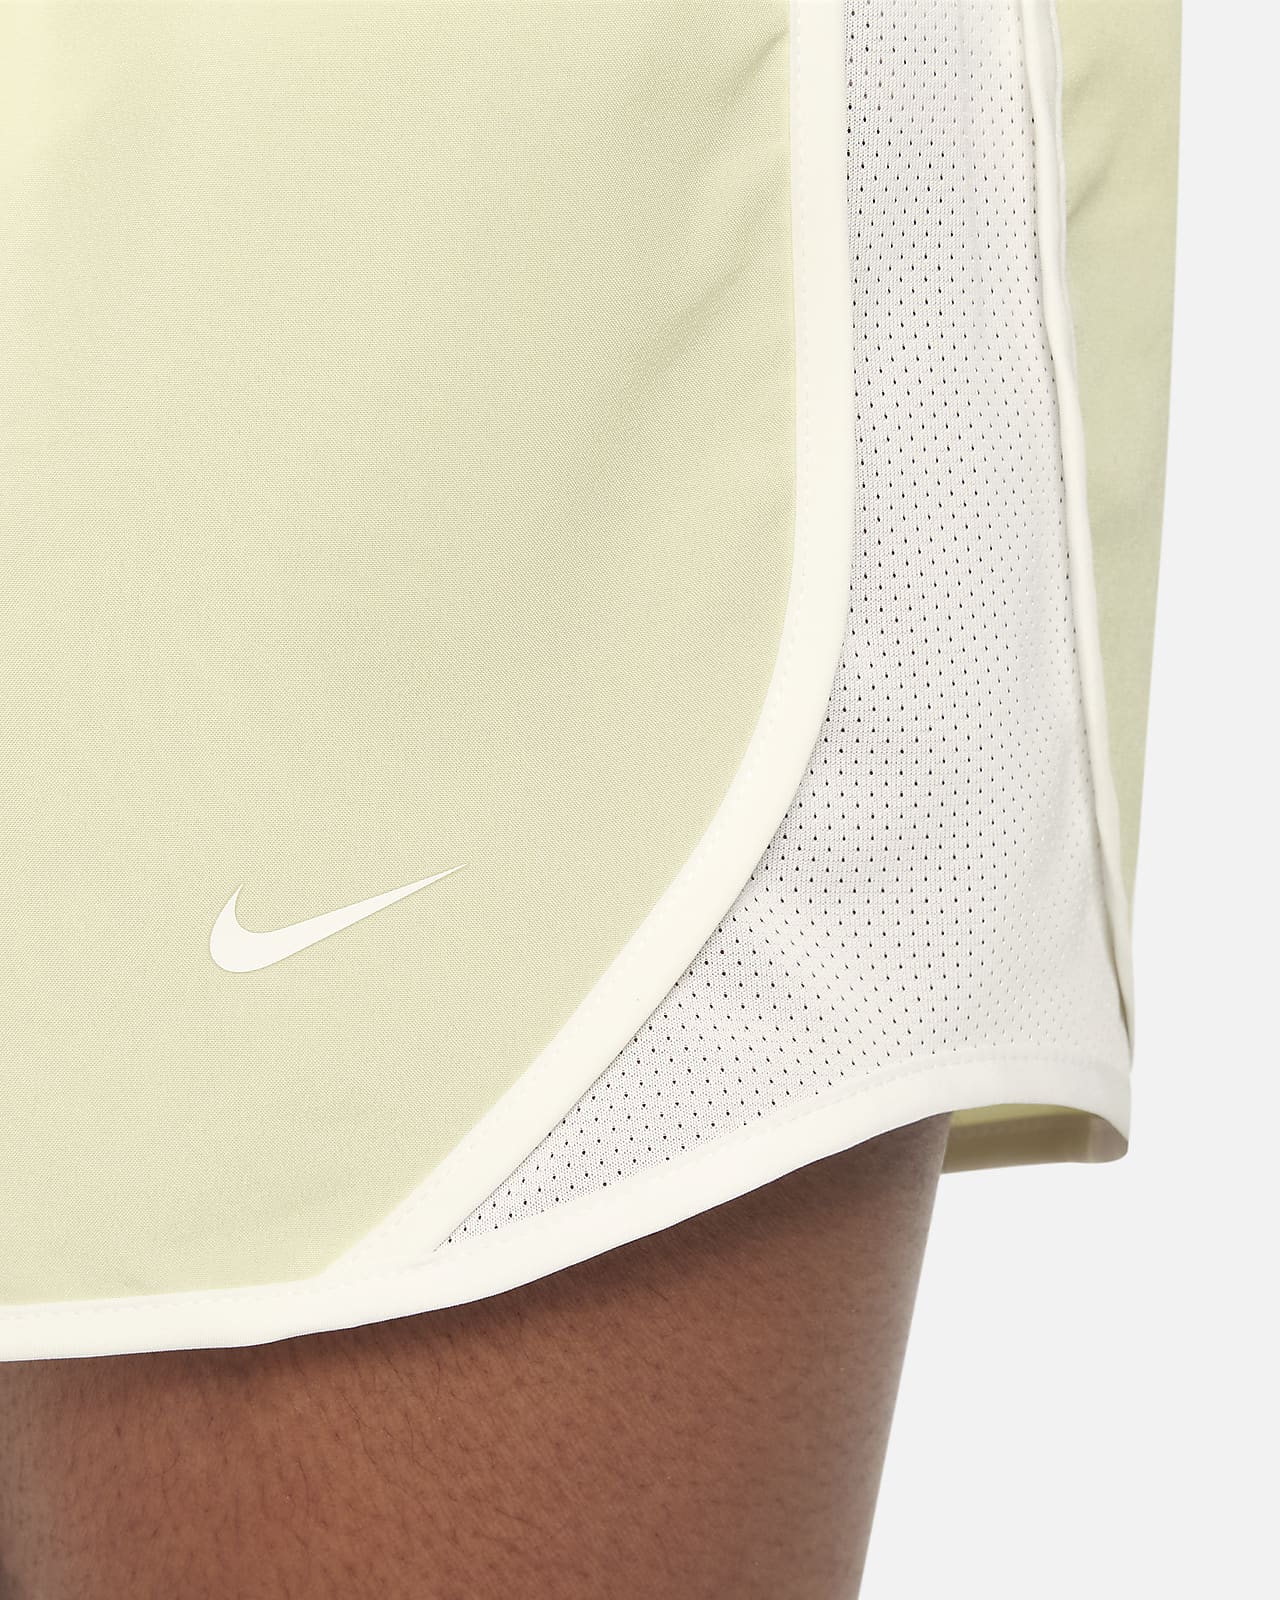 Nike Dri-Fit Kids Girls Medium 5-6 Yrs Lined Athletic Shorts Green/Pink TS1